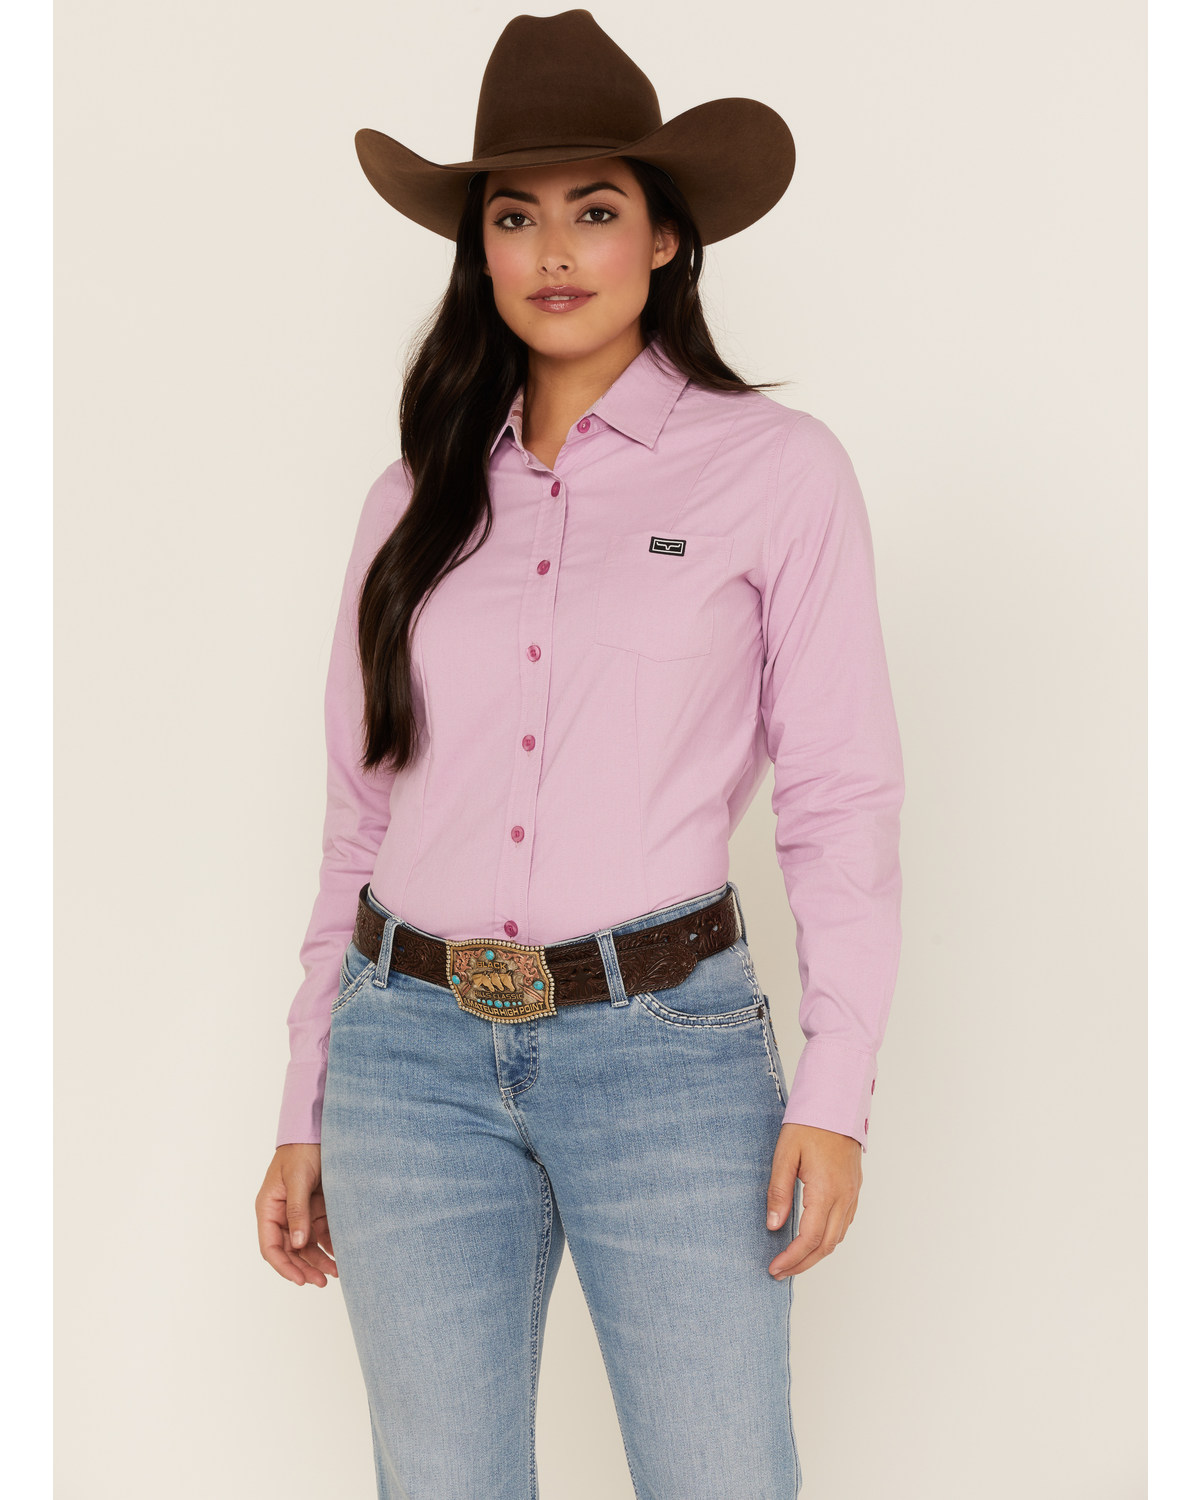 Kimes Ranch Women's Linville Long Sleeve Western Button Down Shirt